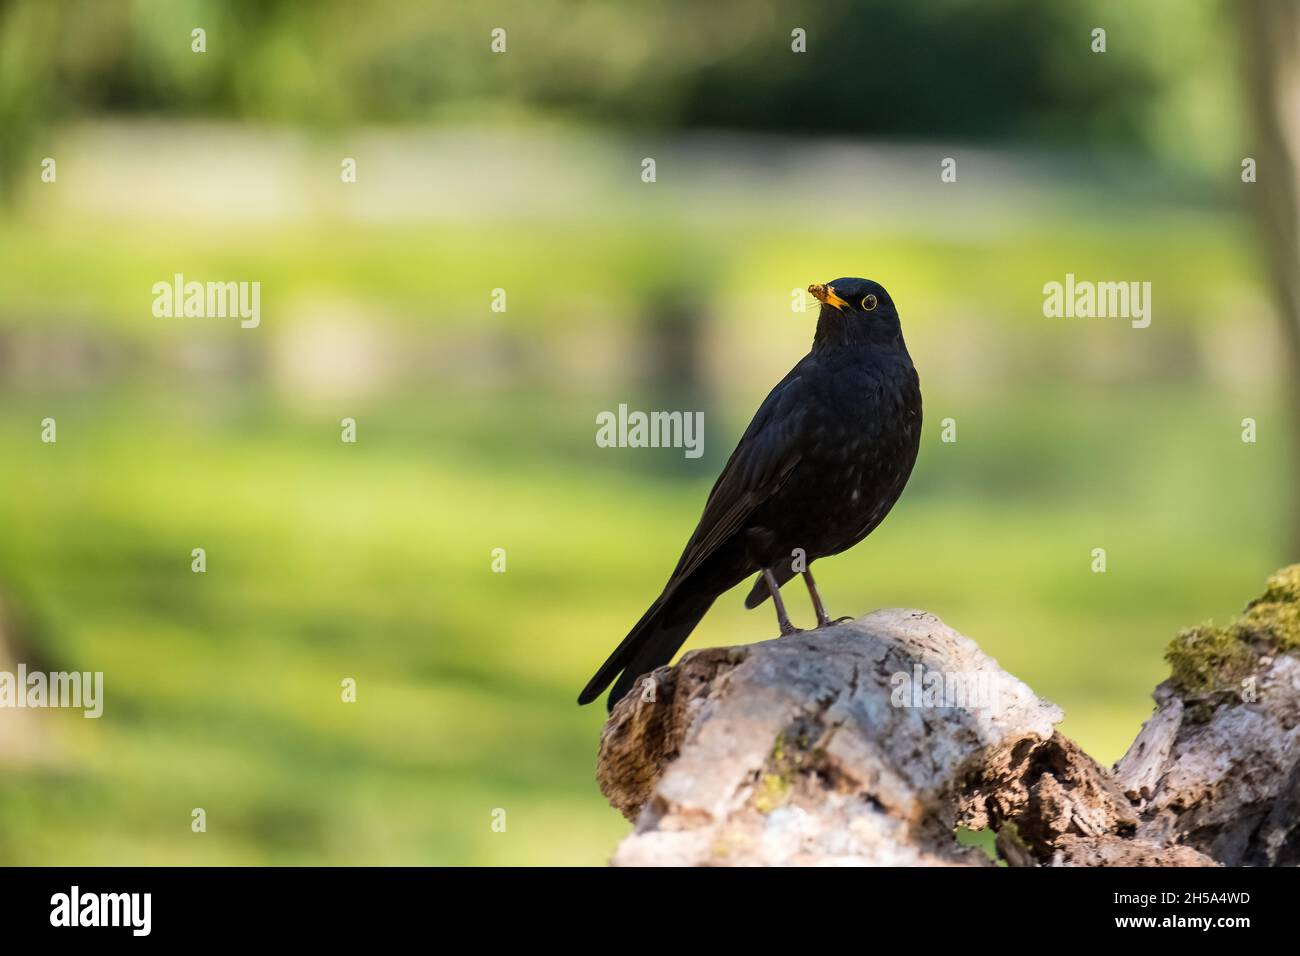 European blackbird in the park standing on a tree Stock Photo